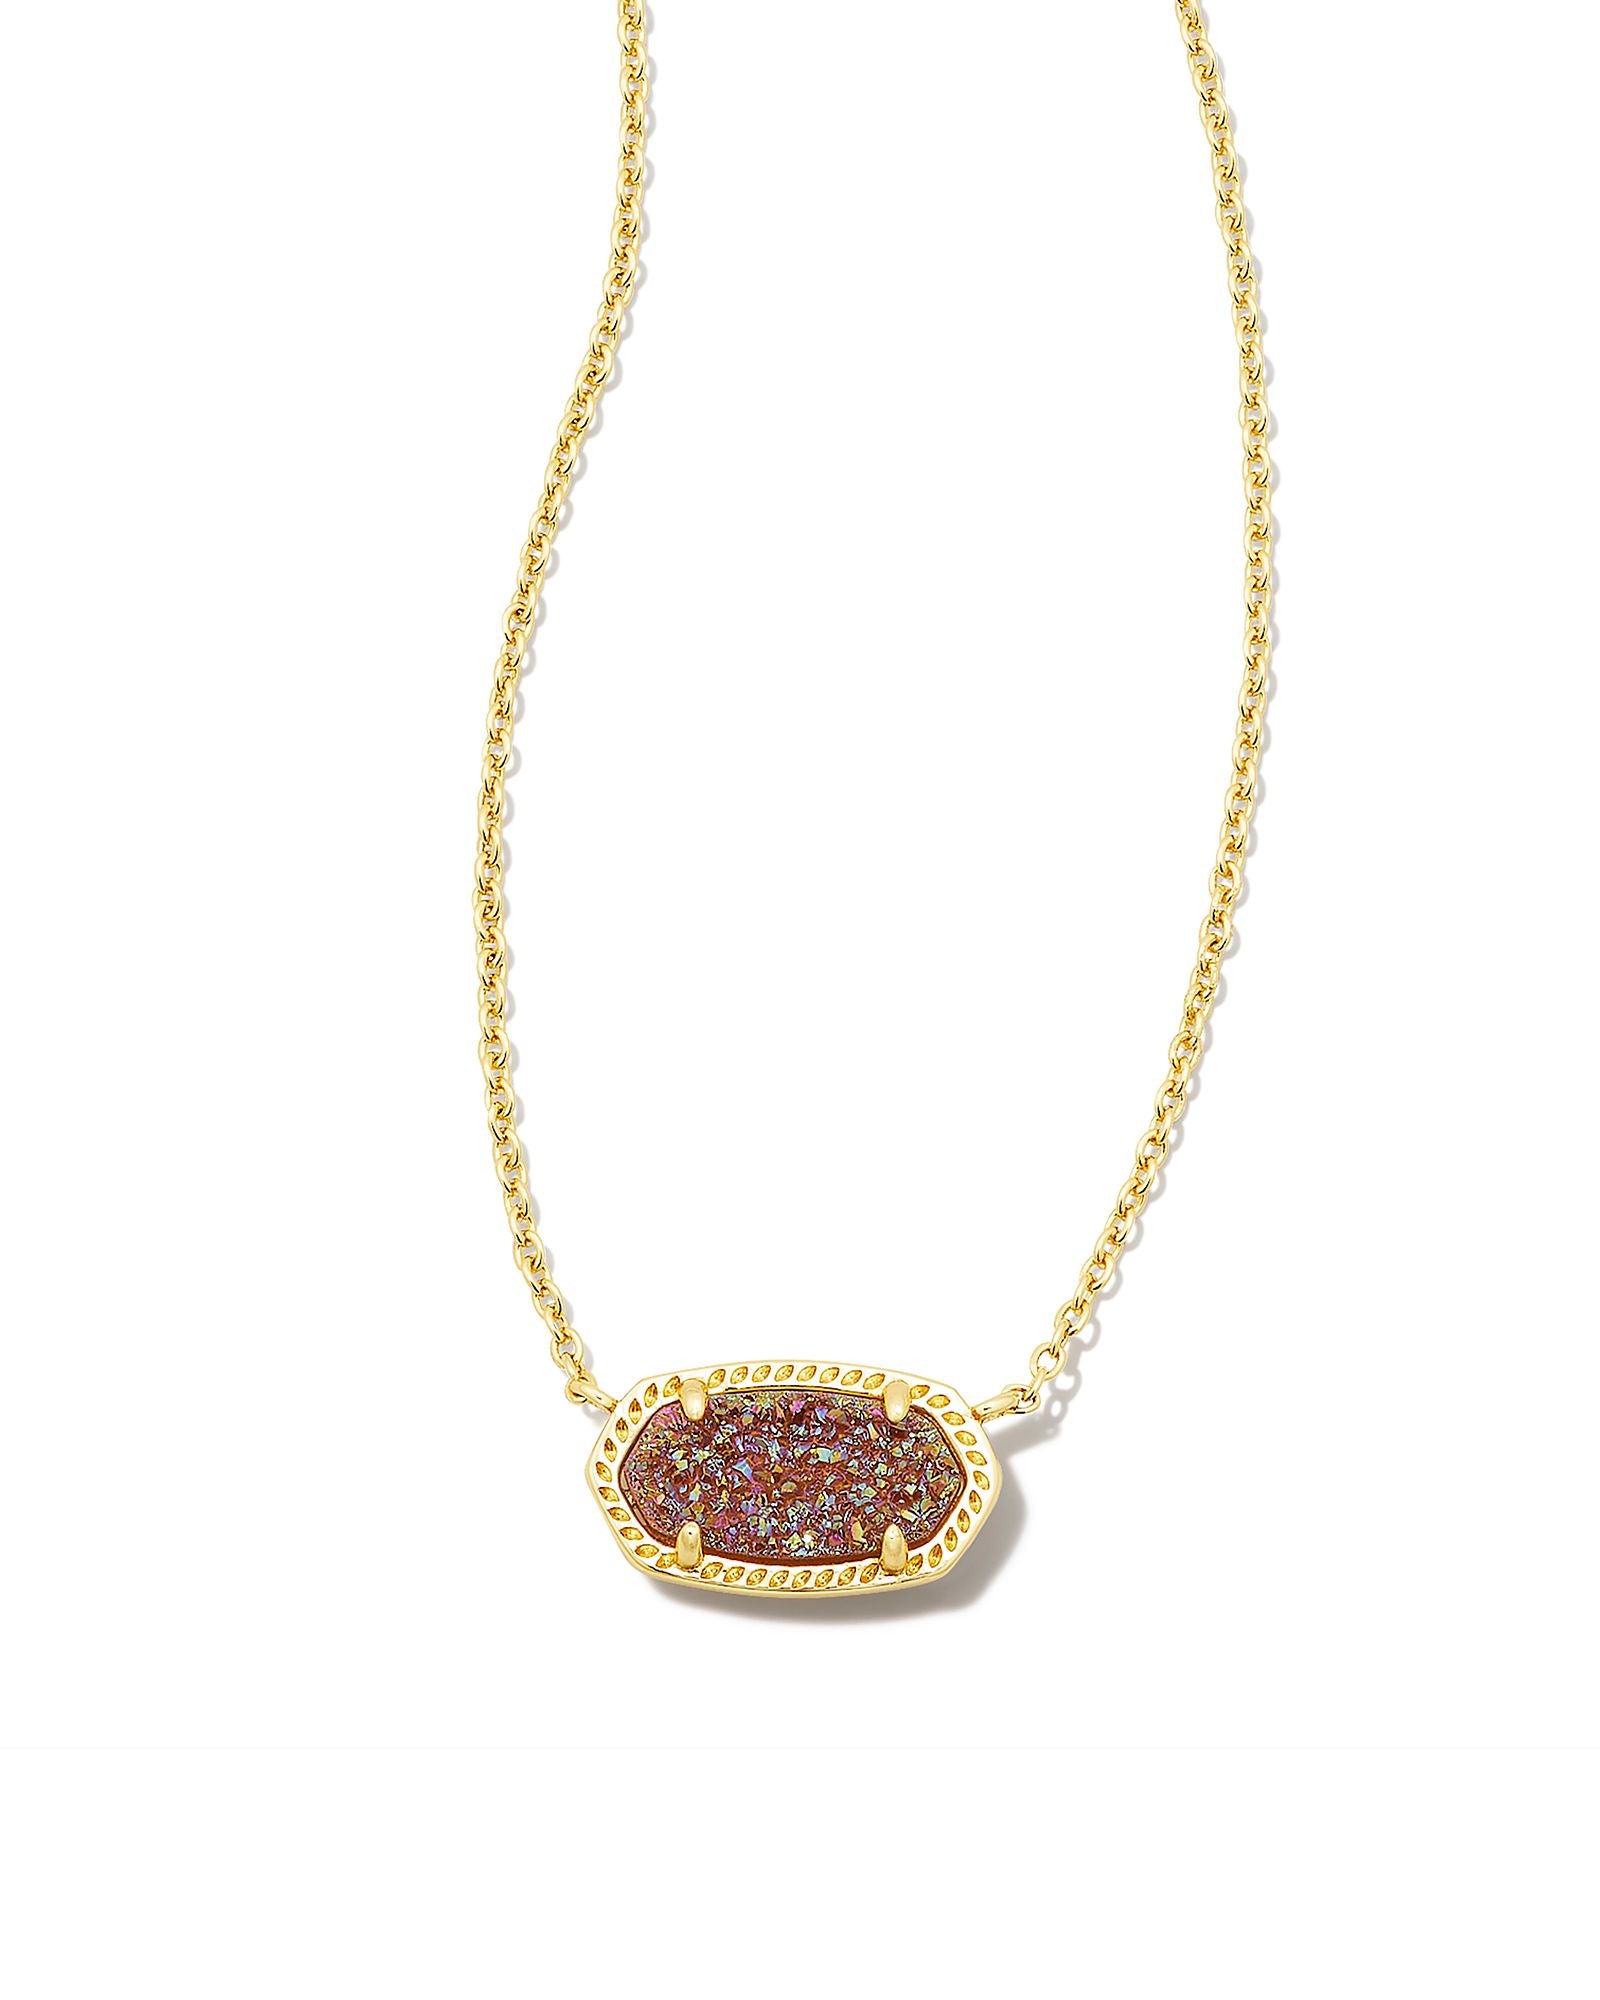 The Kendra Scott Elisa Pendant Necklace Sells Every Minute